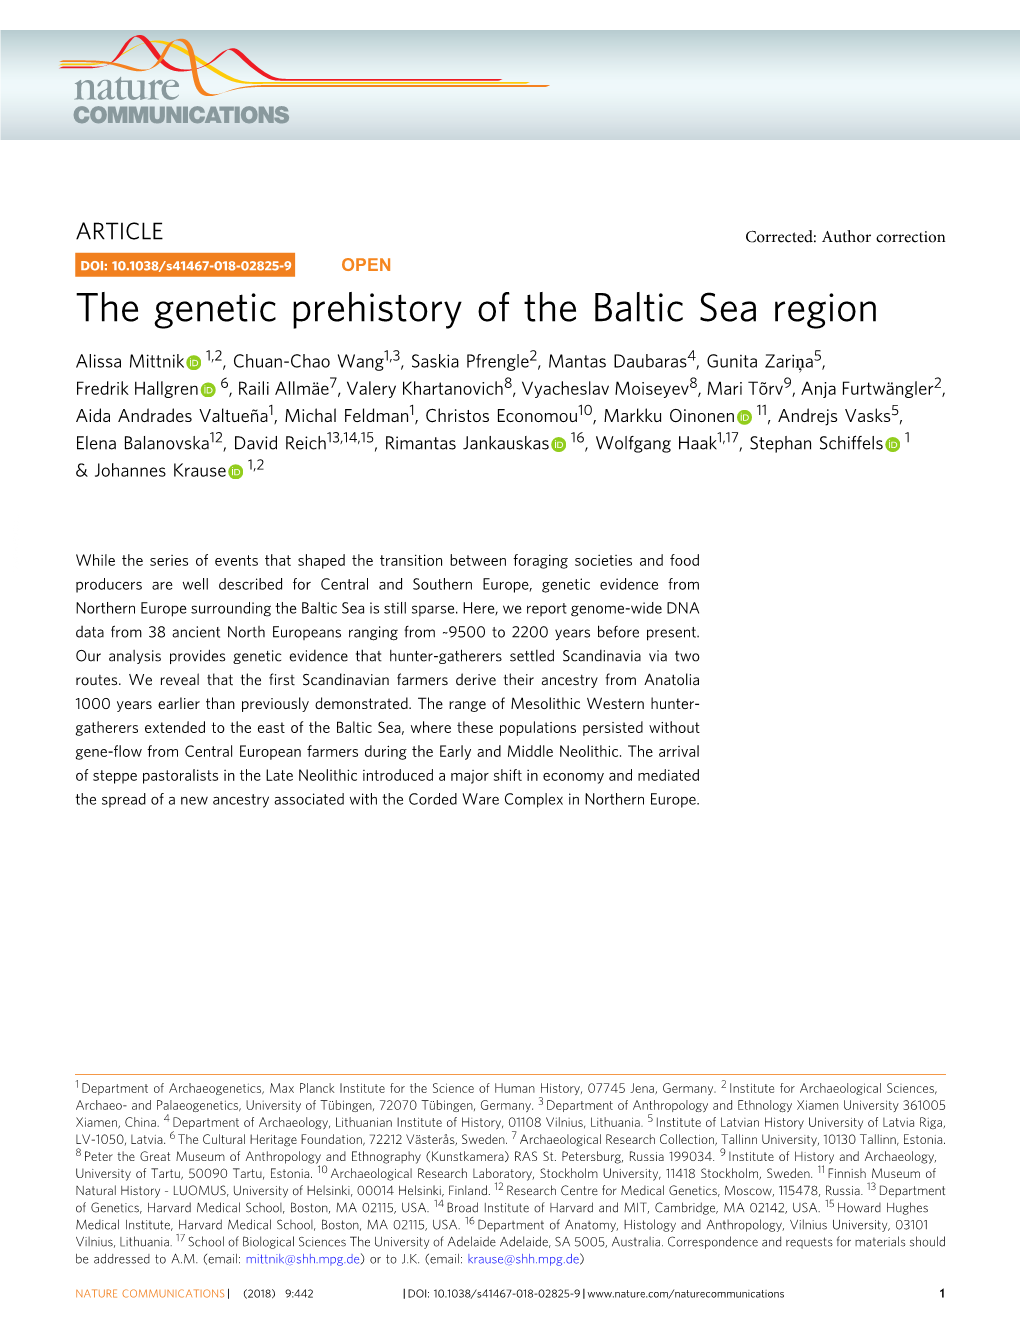 The Genetic Prehistory of the Baltic Sea Region